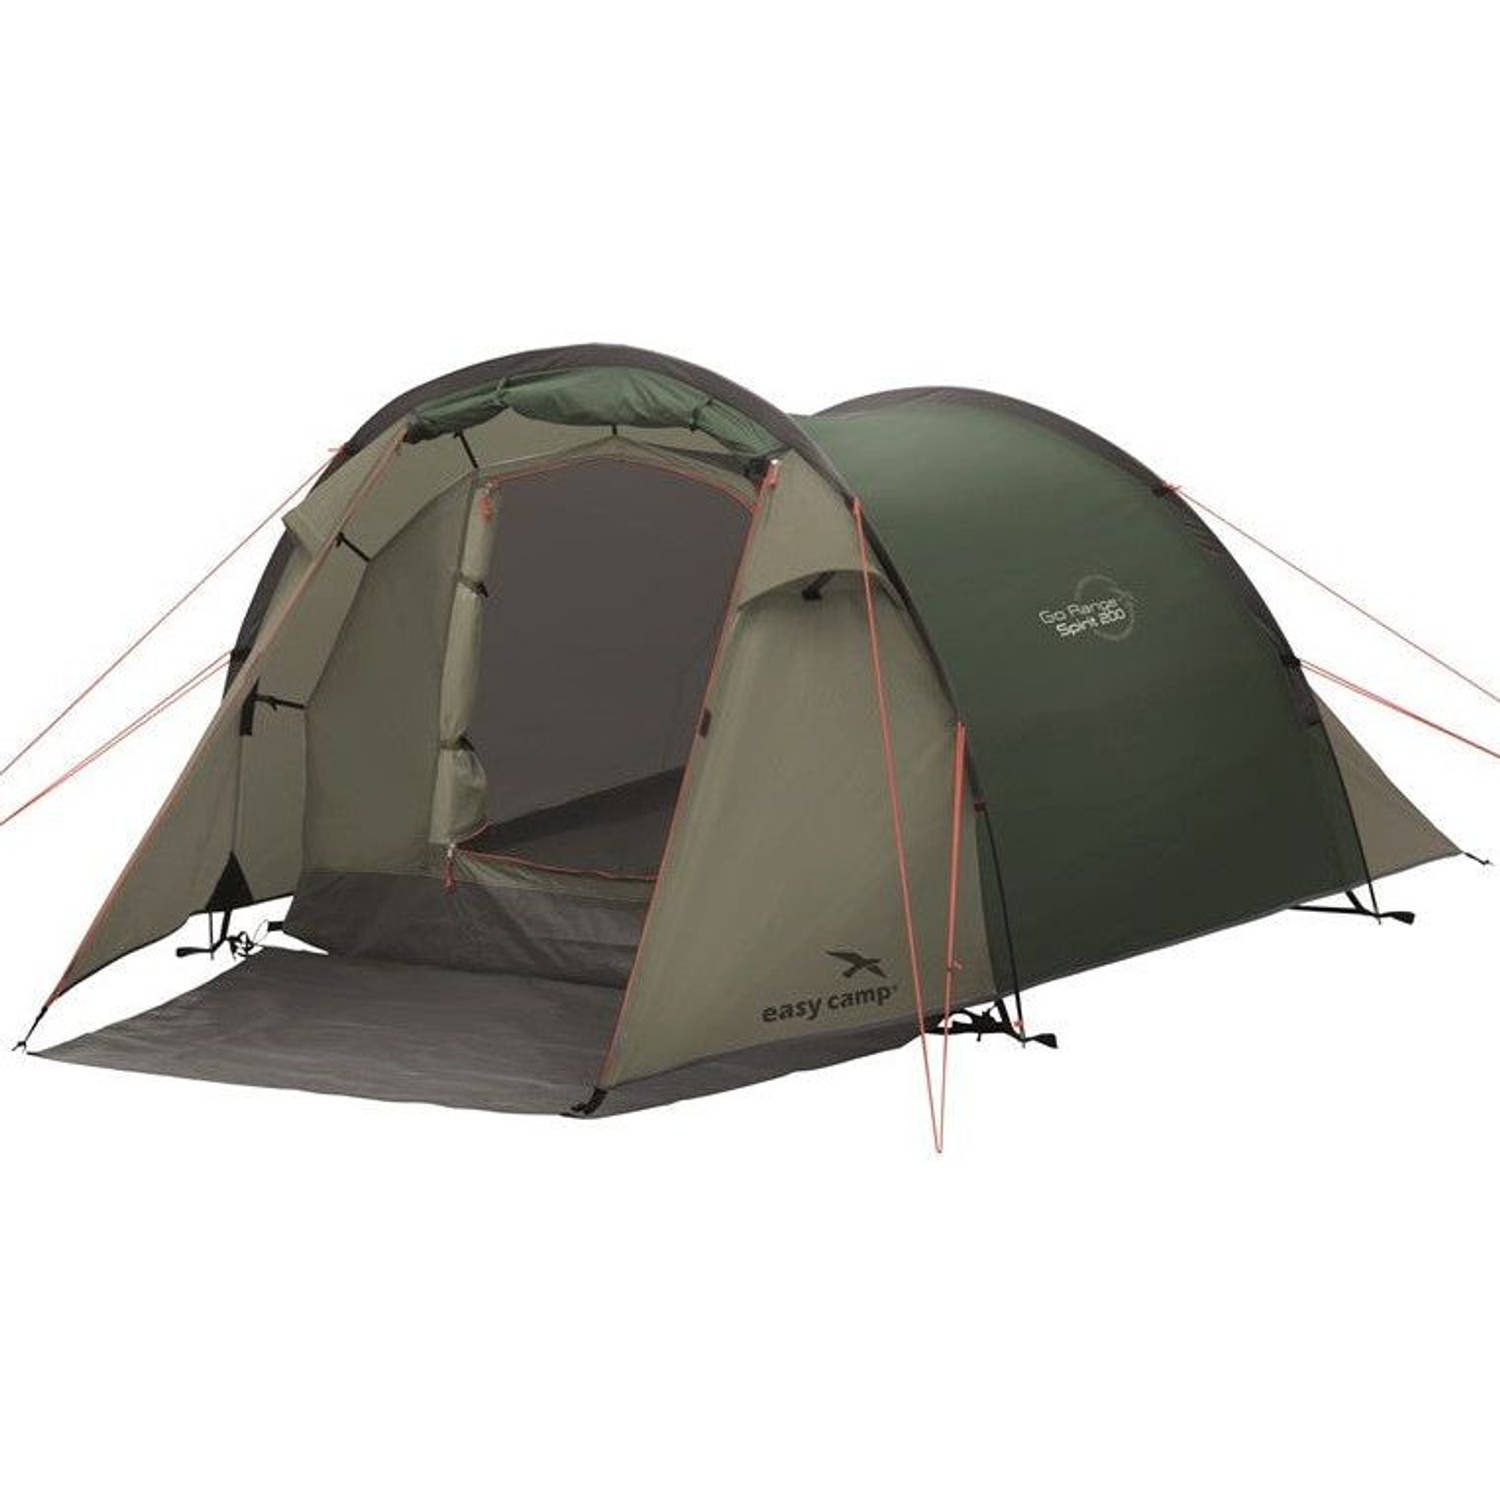 Easy Camp Easy Camp Spirit 200 tent